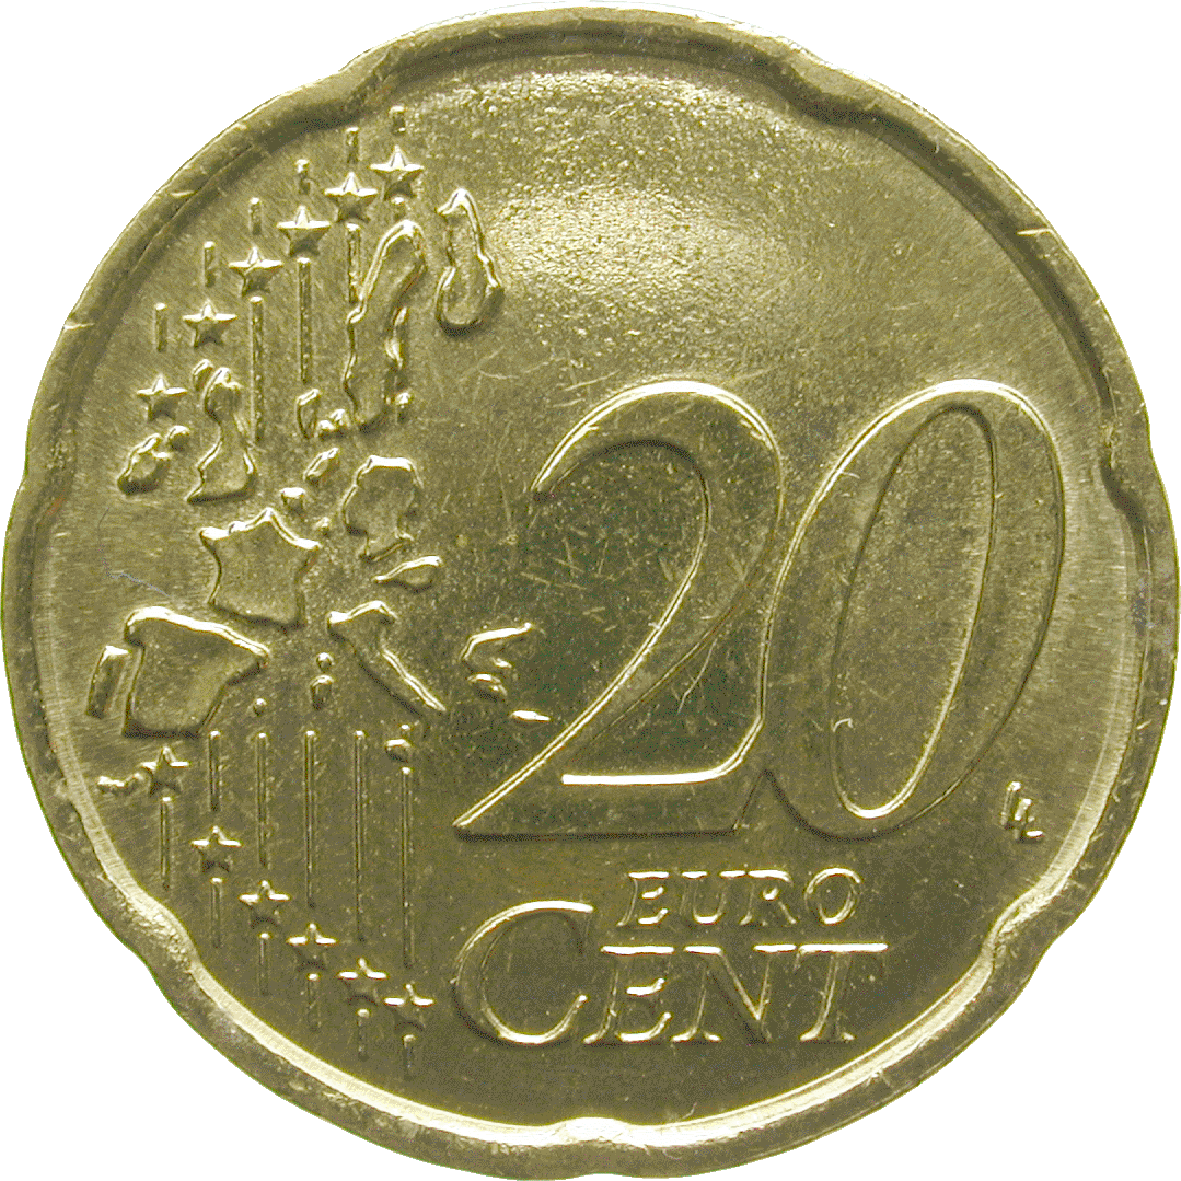 Republic of San Marino, 20 Euro Cent 2008 (obverse)